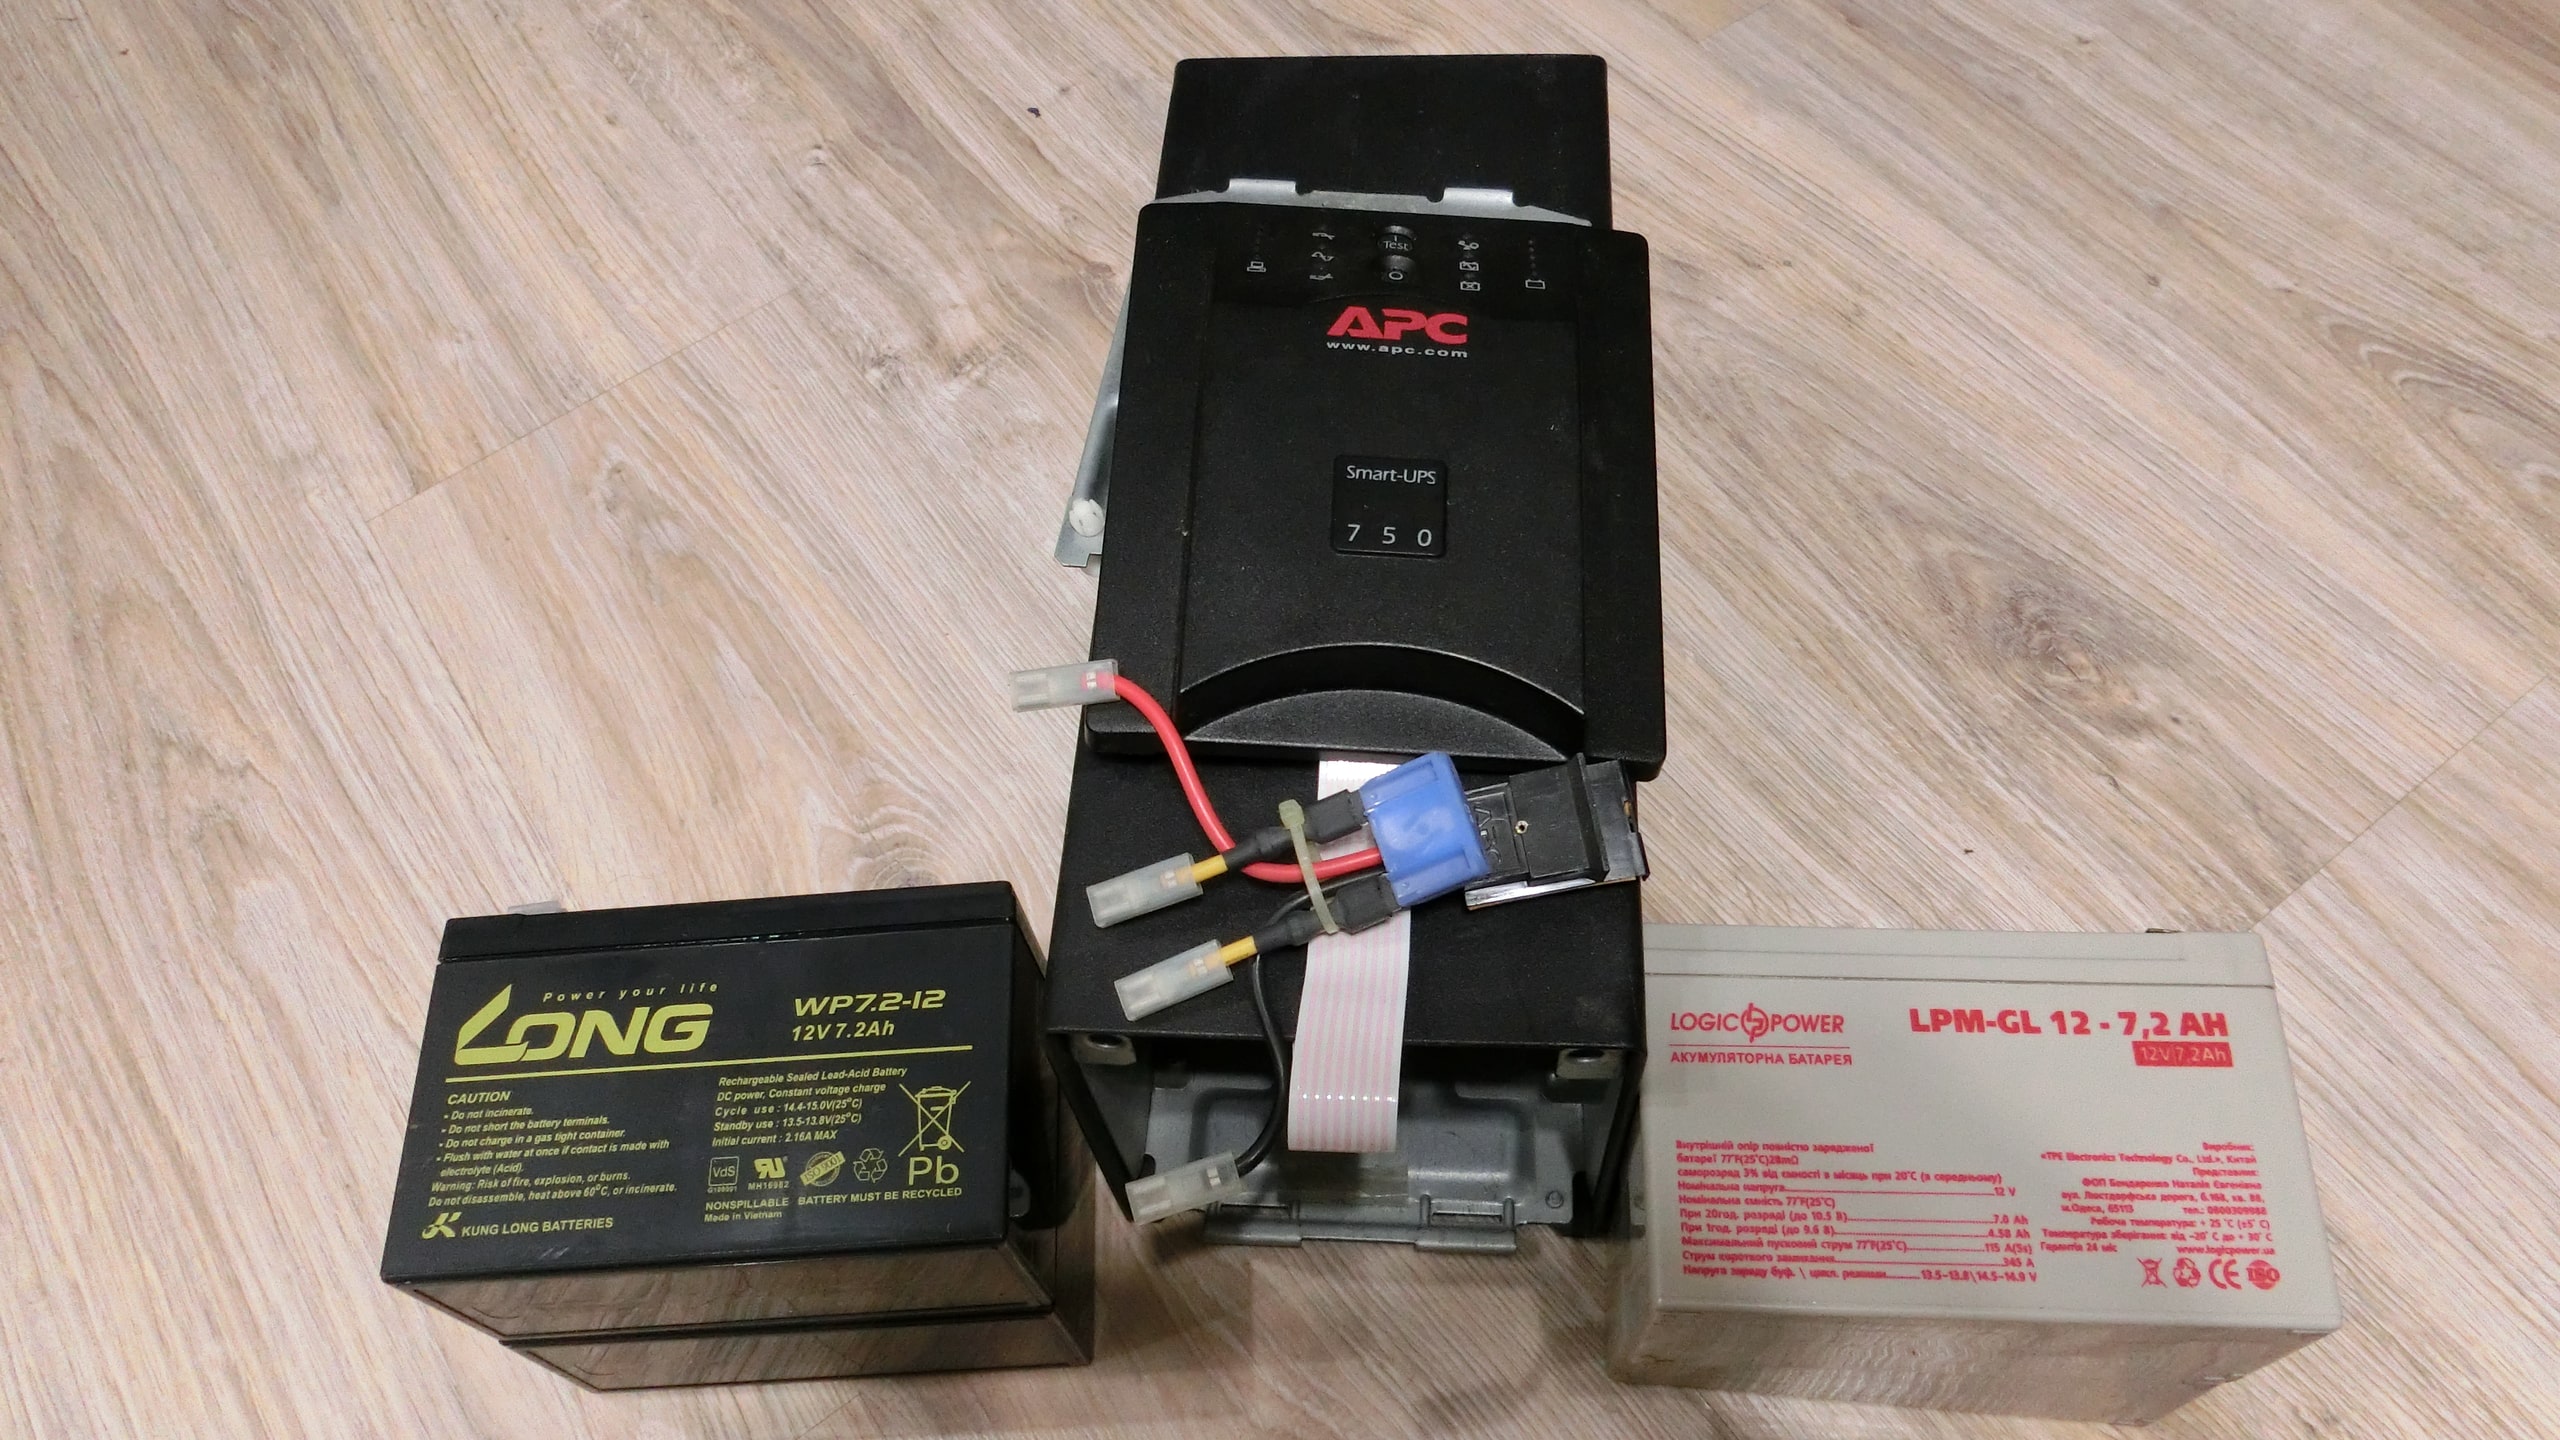 Apc ups battery